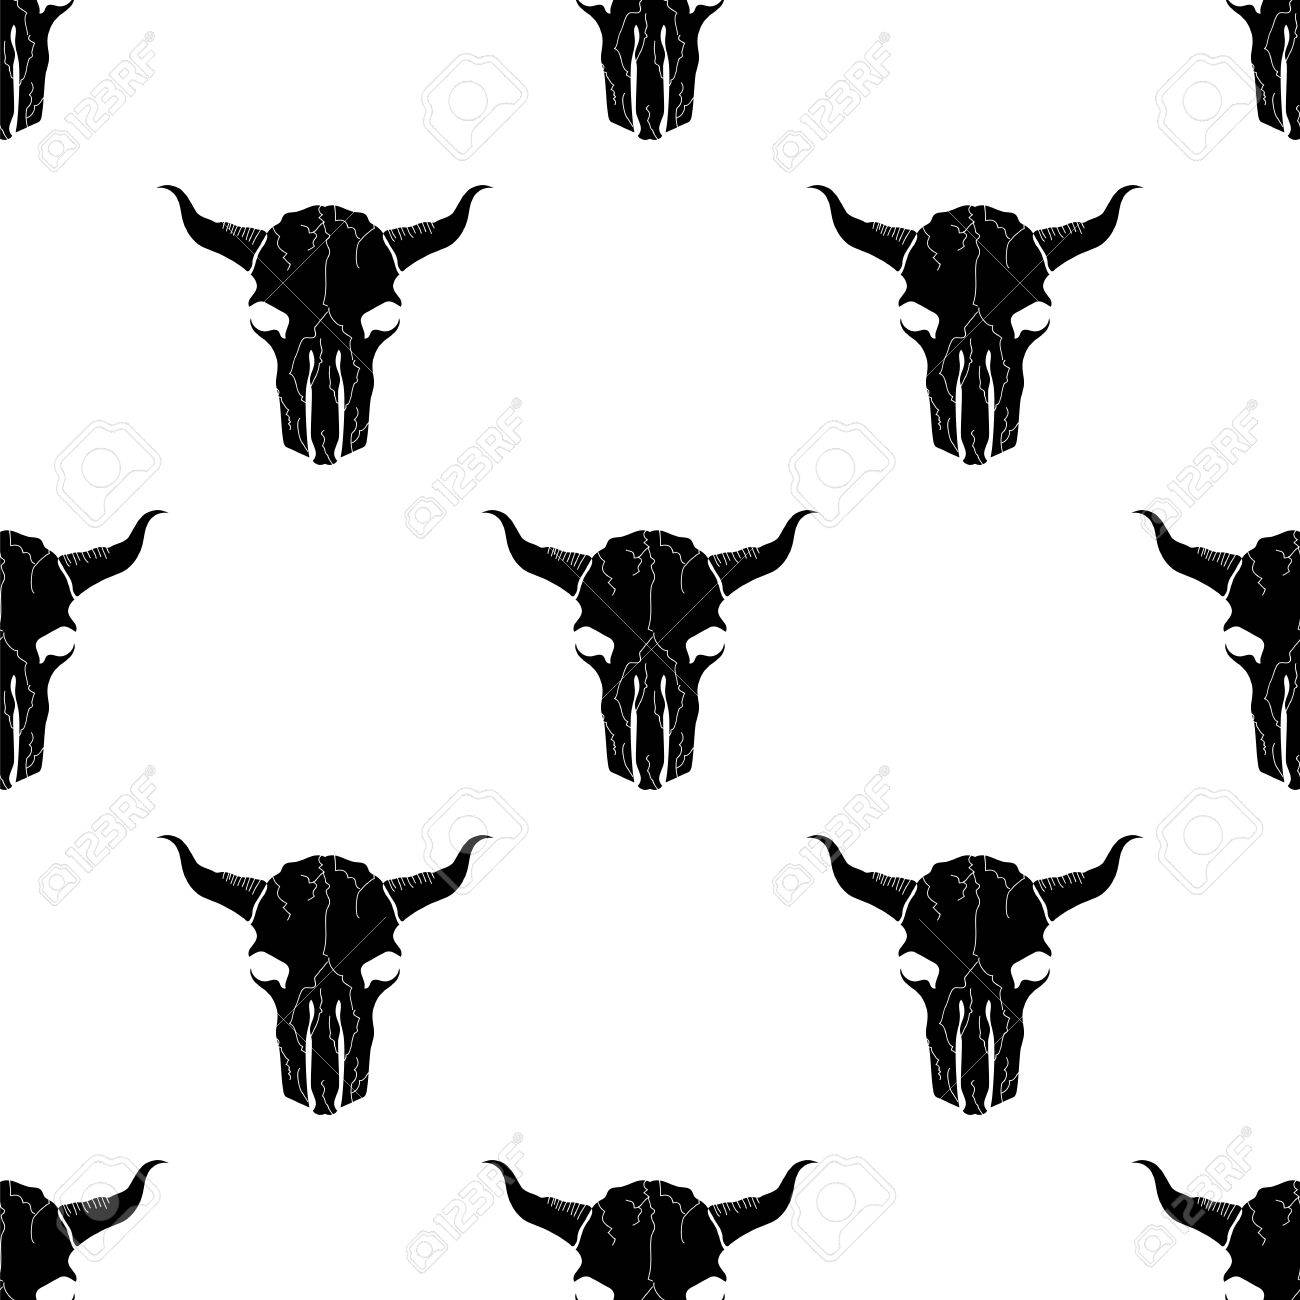 Bull Skull Silhouette Seamless Pattern Animal Background Royalty